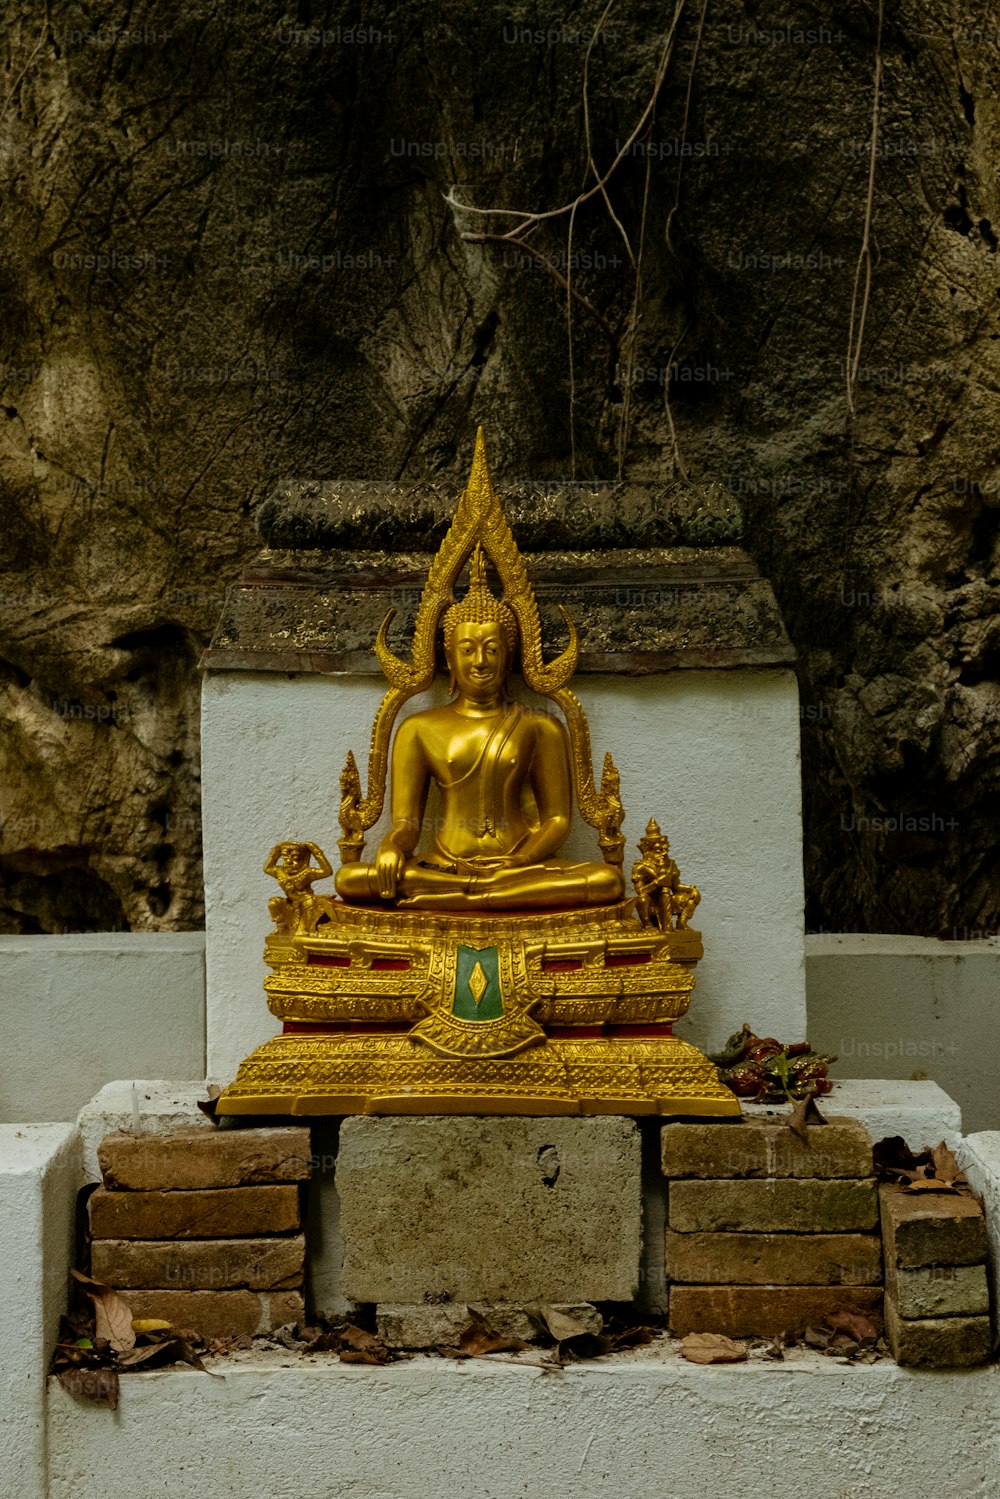 Una estatua dorada sentada encima de una pila de ladrillos